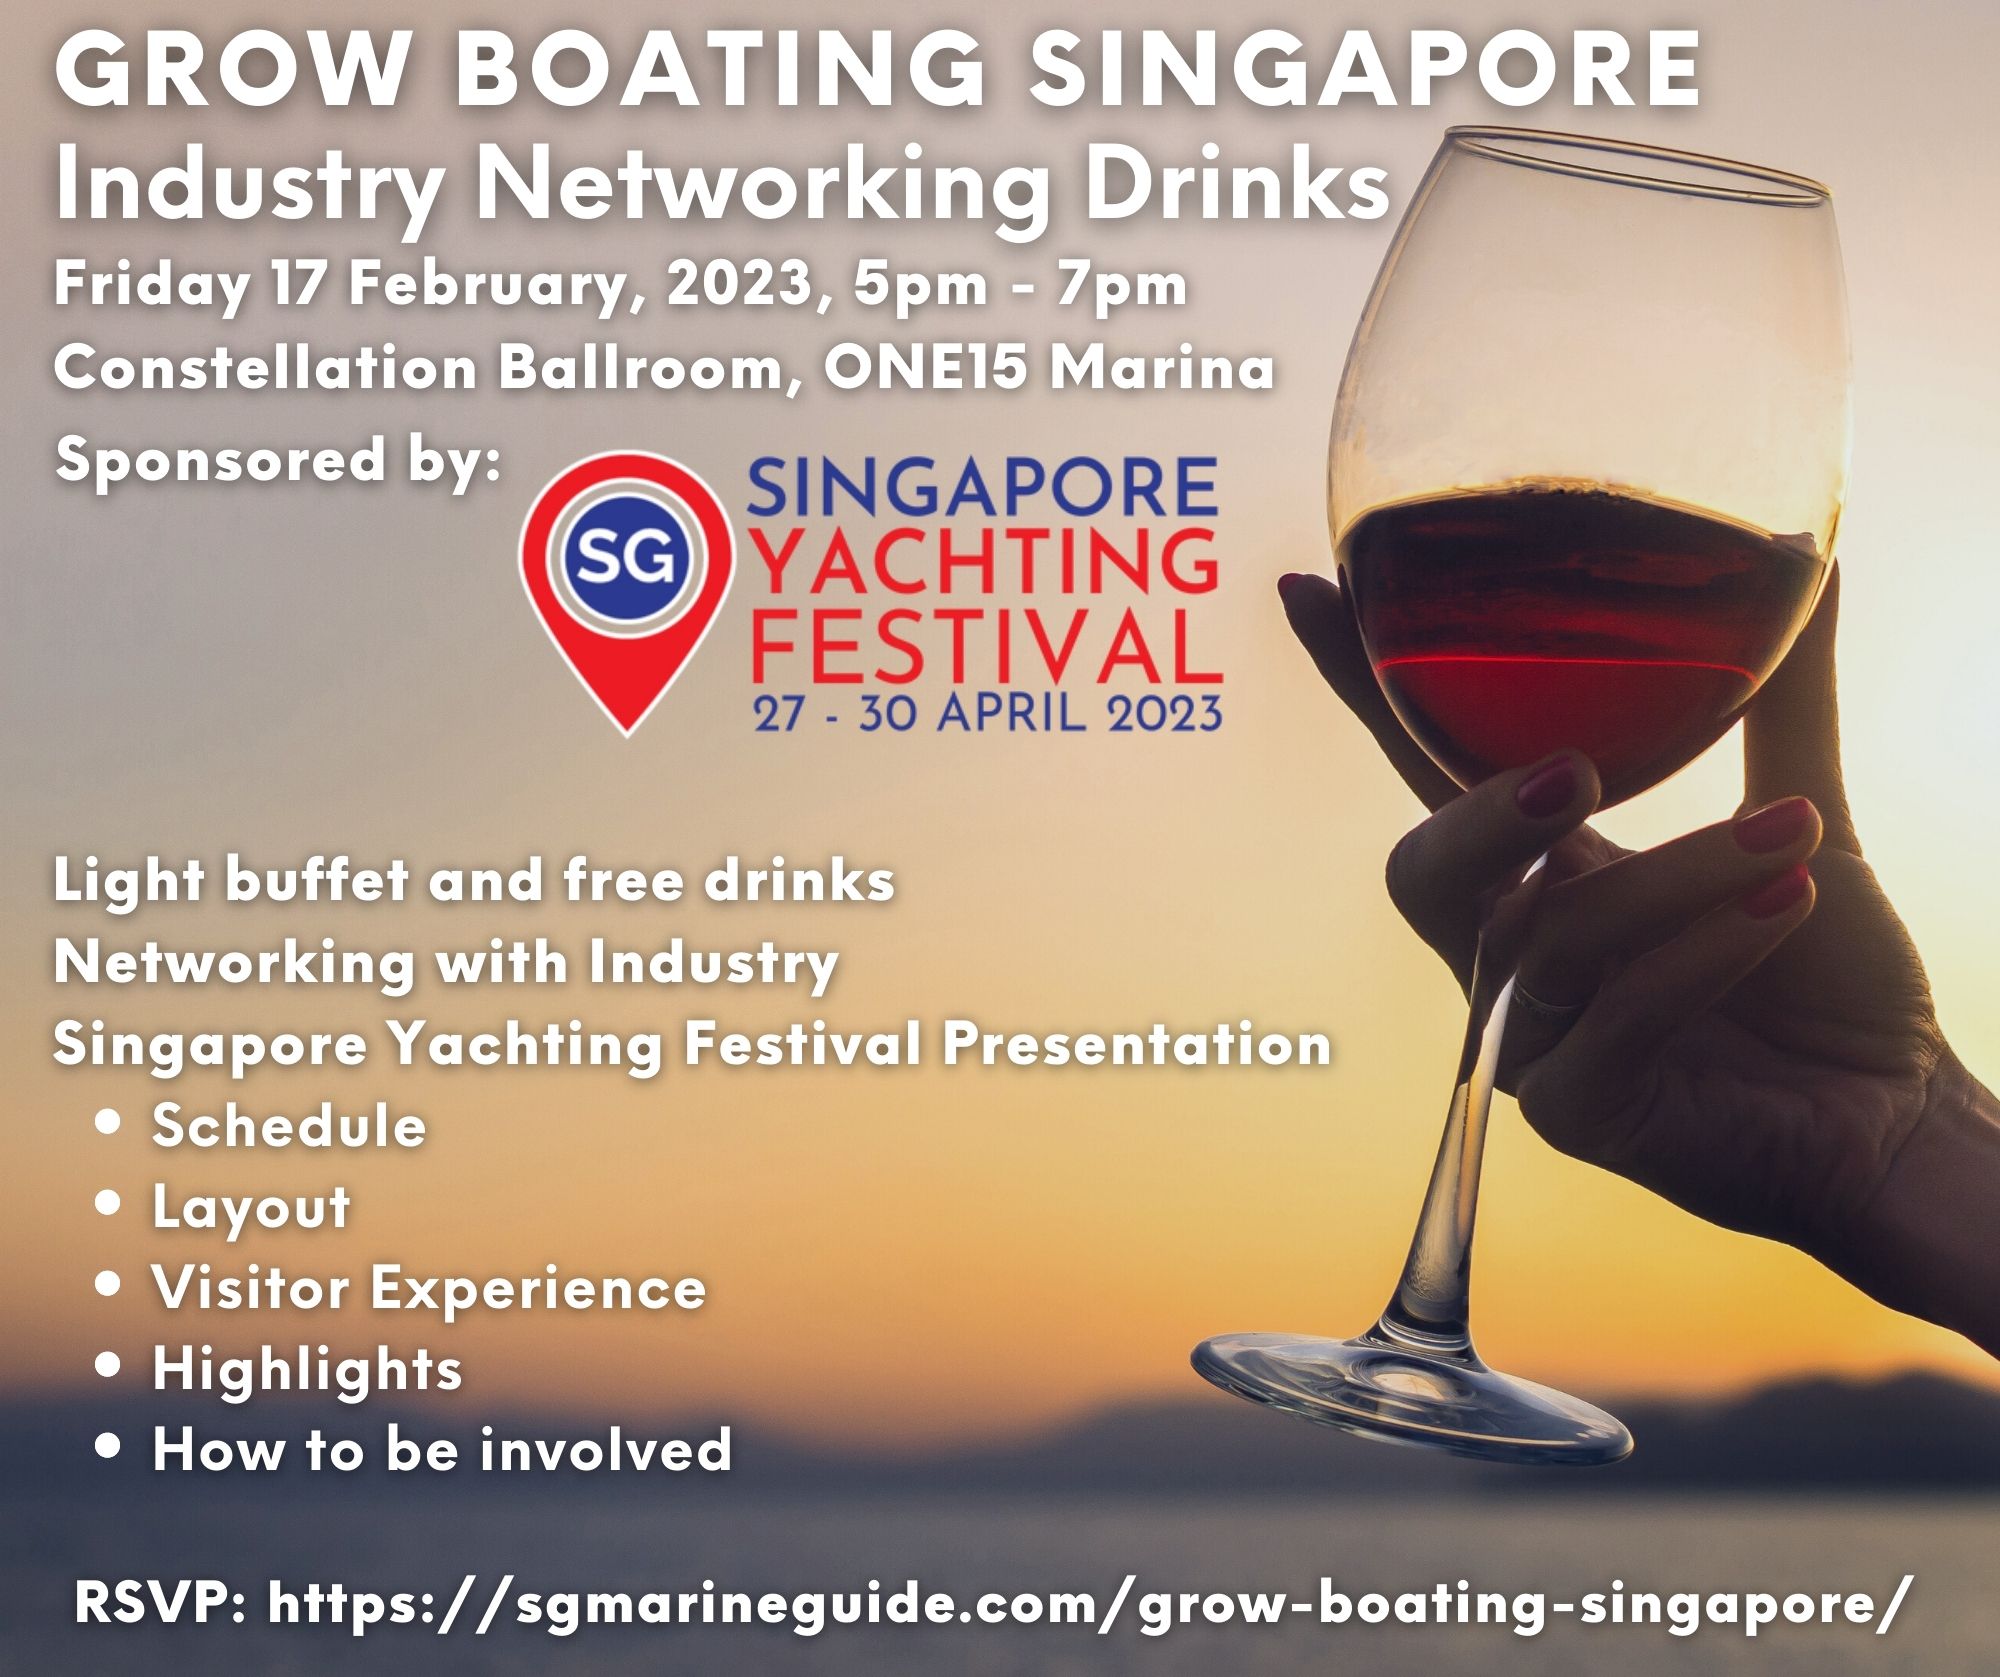 Singapore Yachting Festival Sponsors Grow Boating Singapore